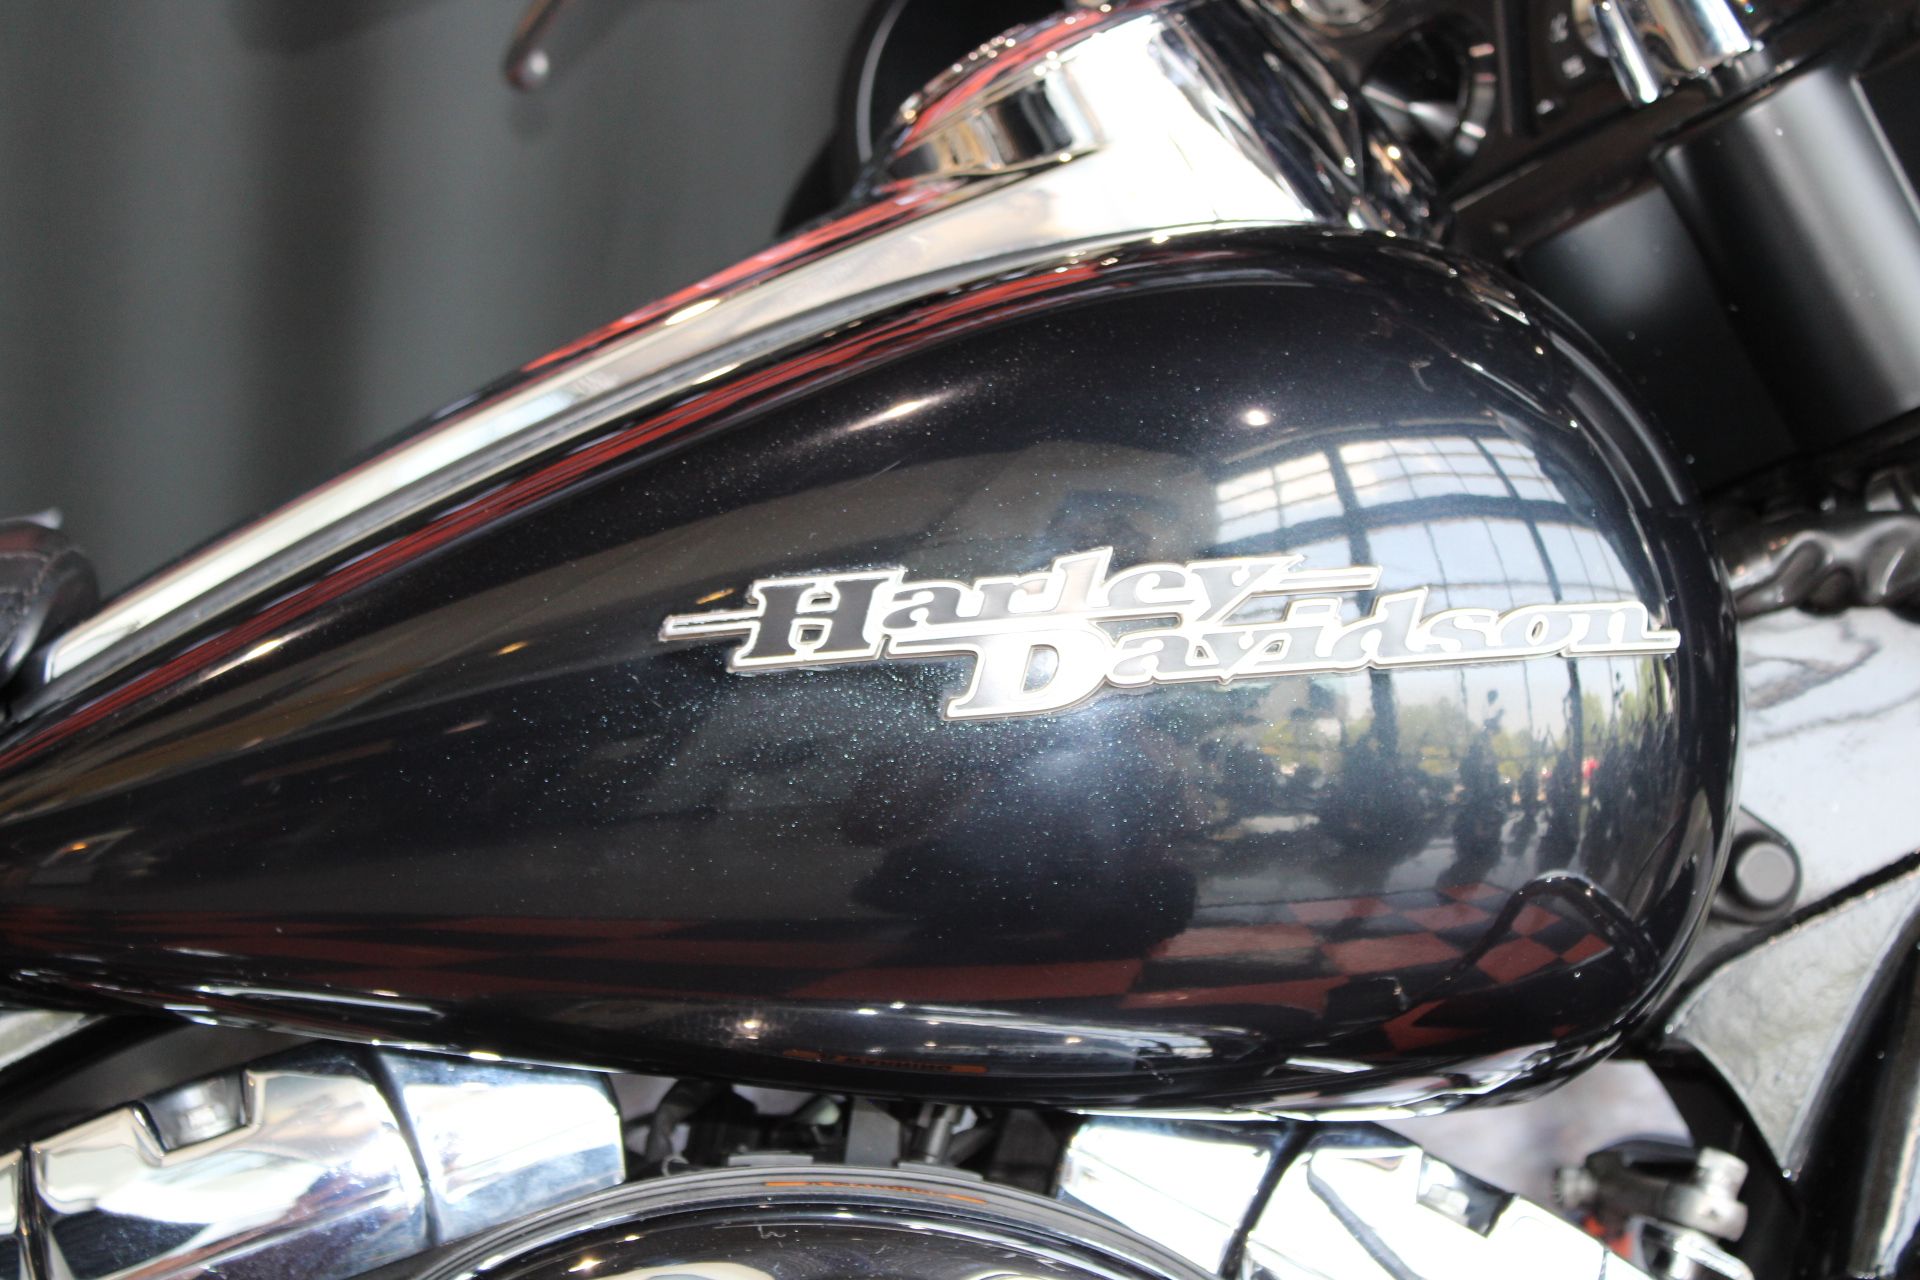 2013 Harley-Davidson Street Glide® in Shorewood, Illinois - Photo 6